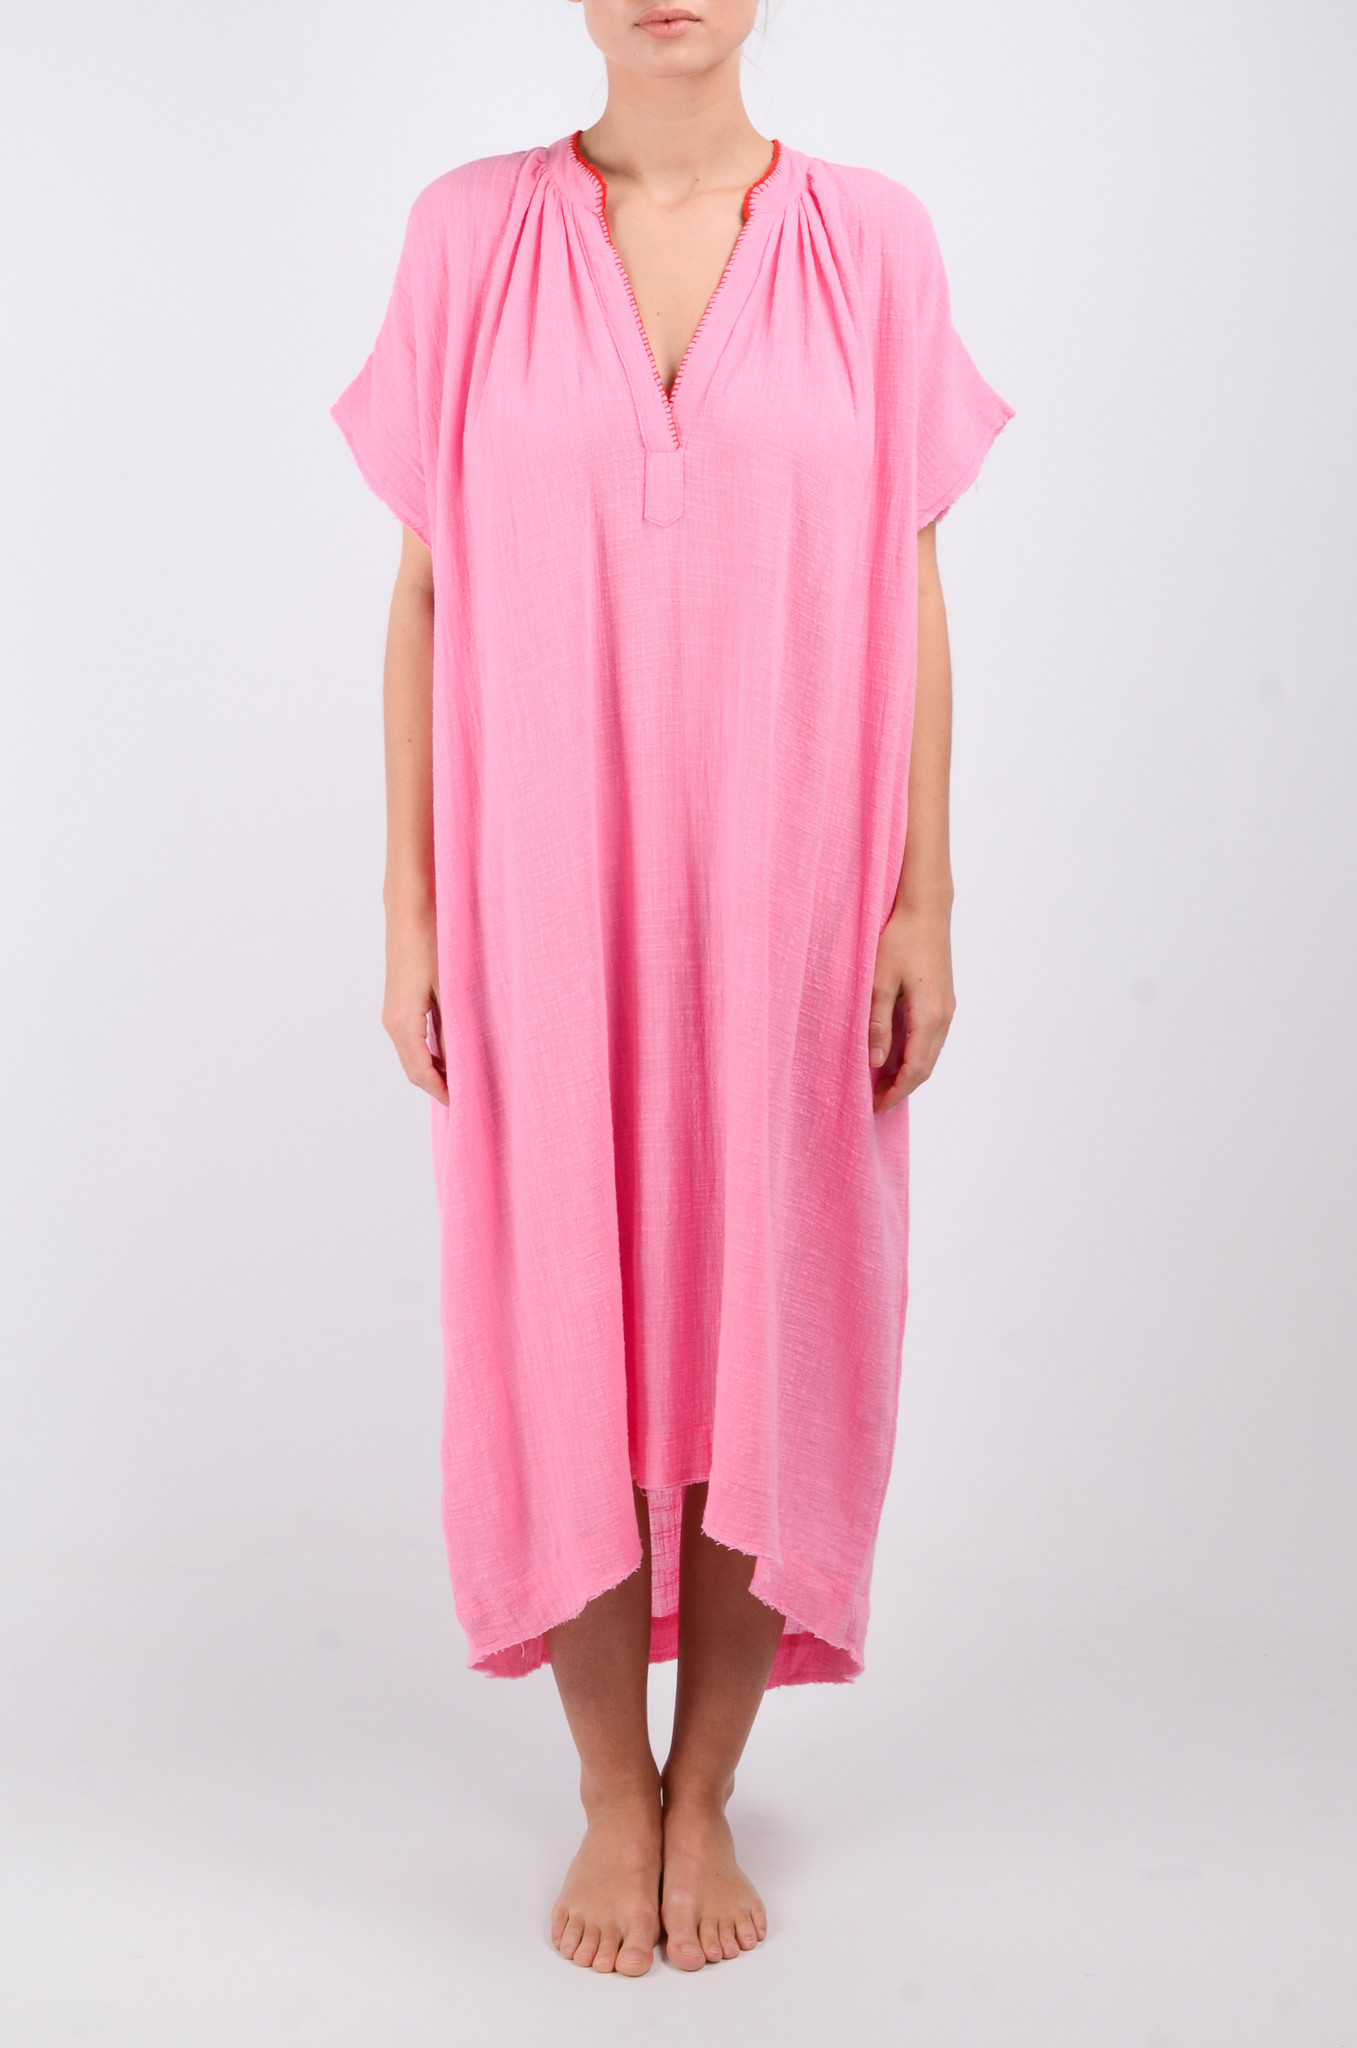 Nihalo Dress in Pink Flamingo-2